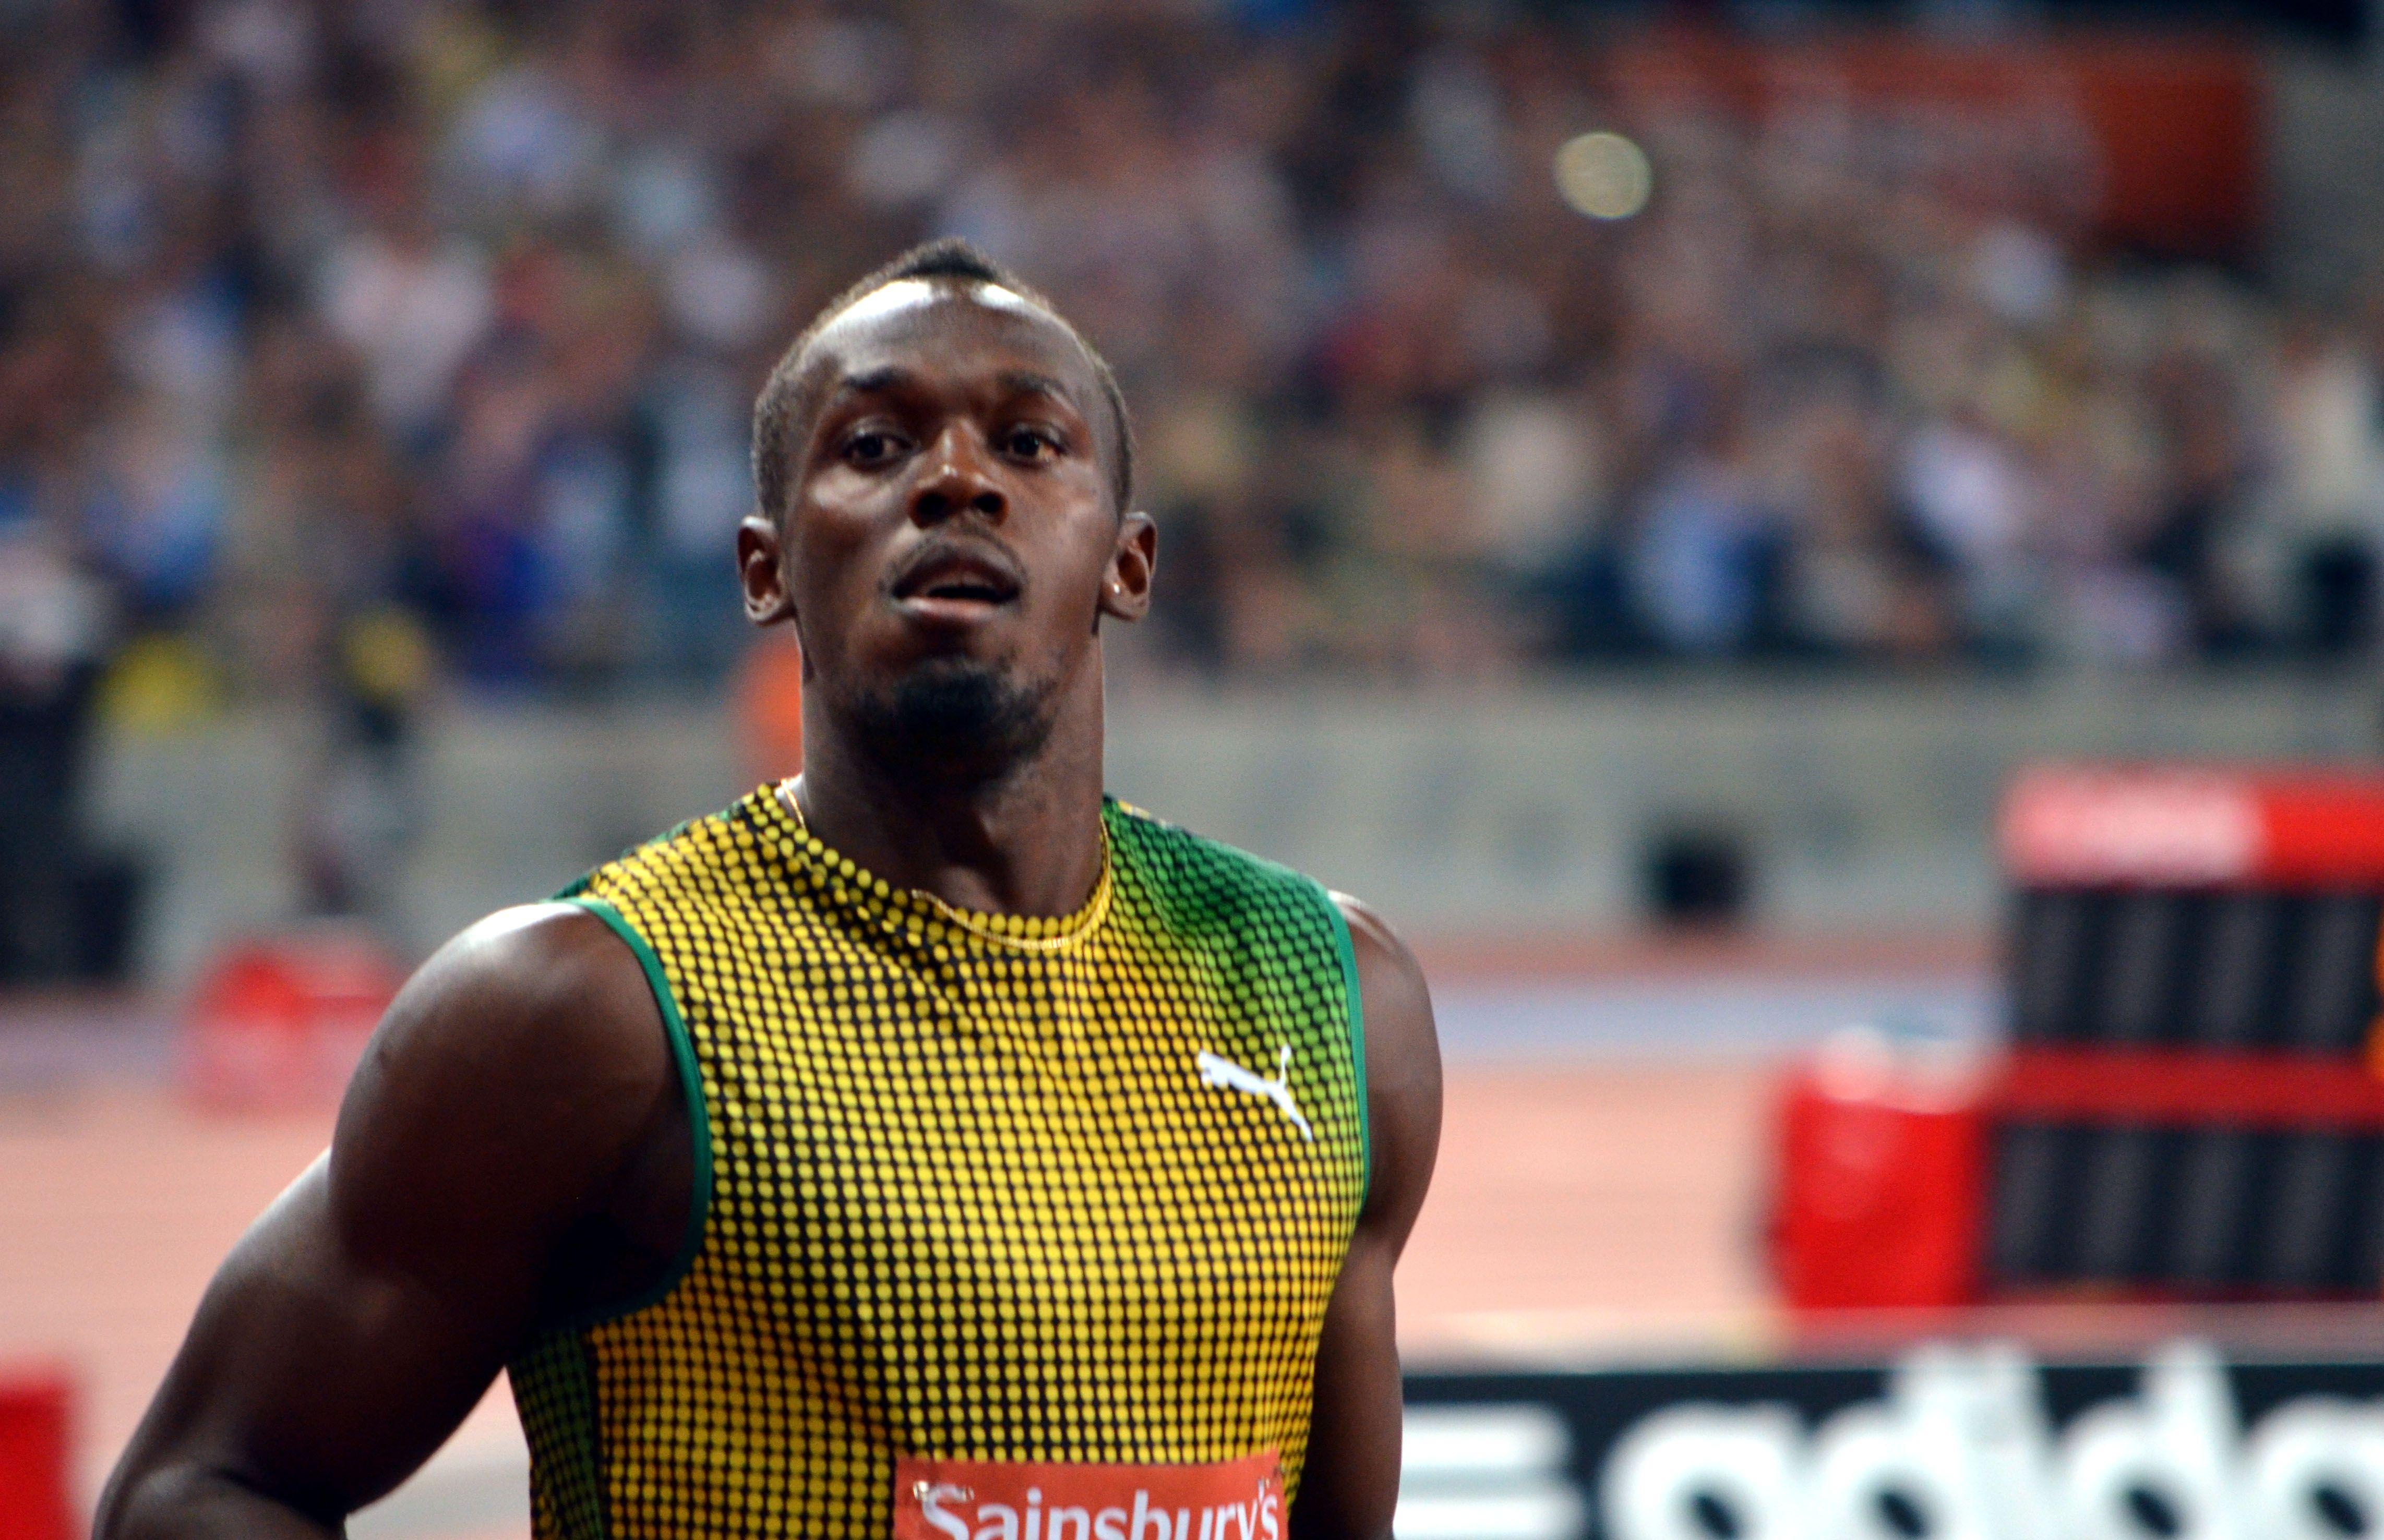 Death of friend hangs heavy over Usain Bolt's final Jamaica run